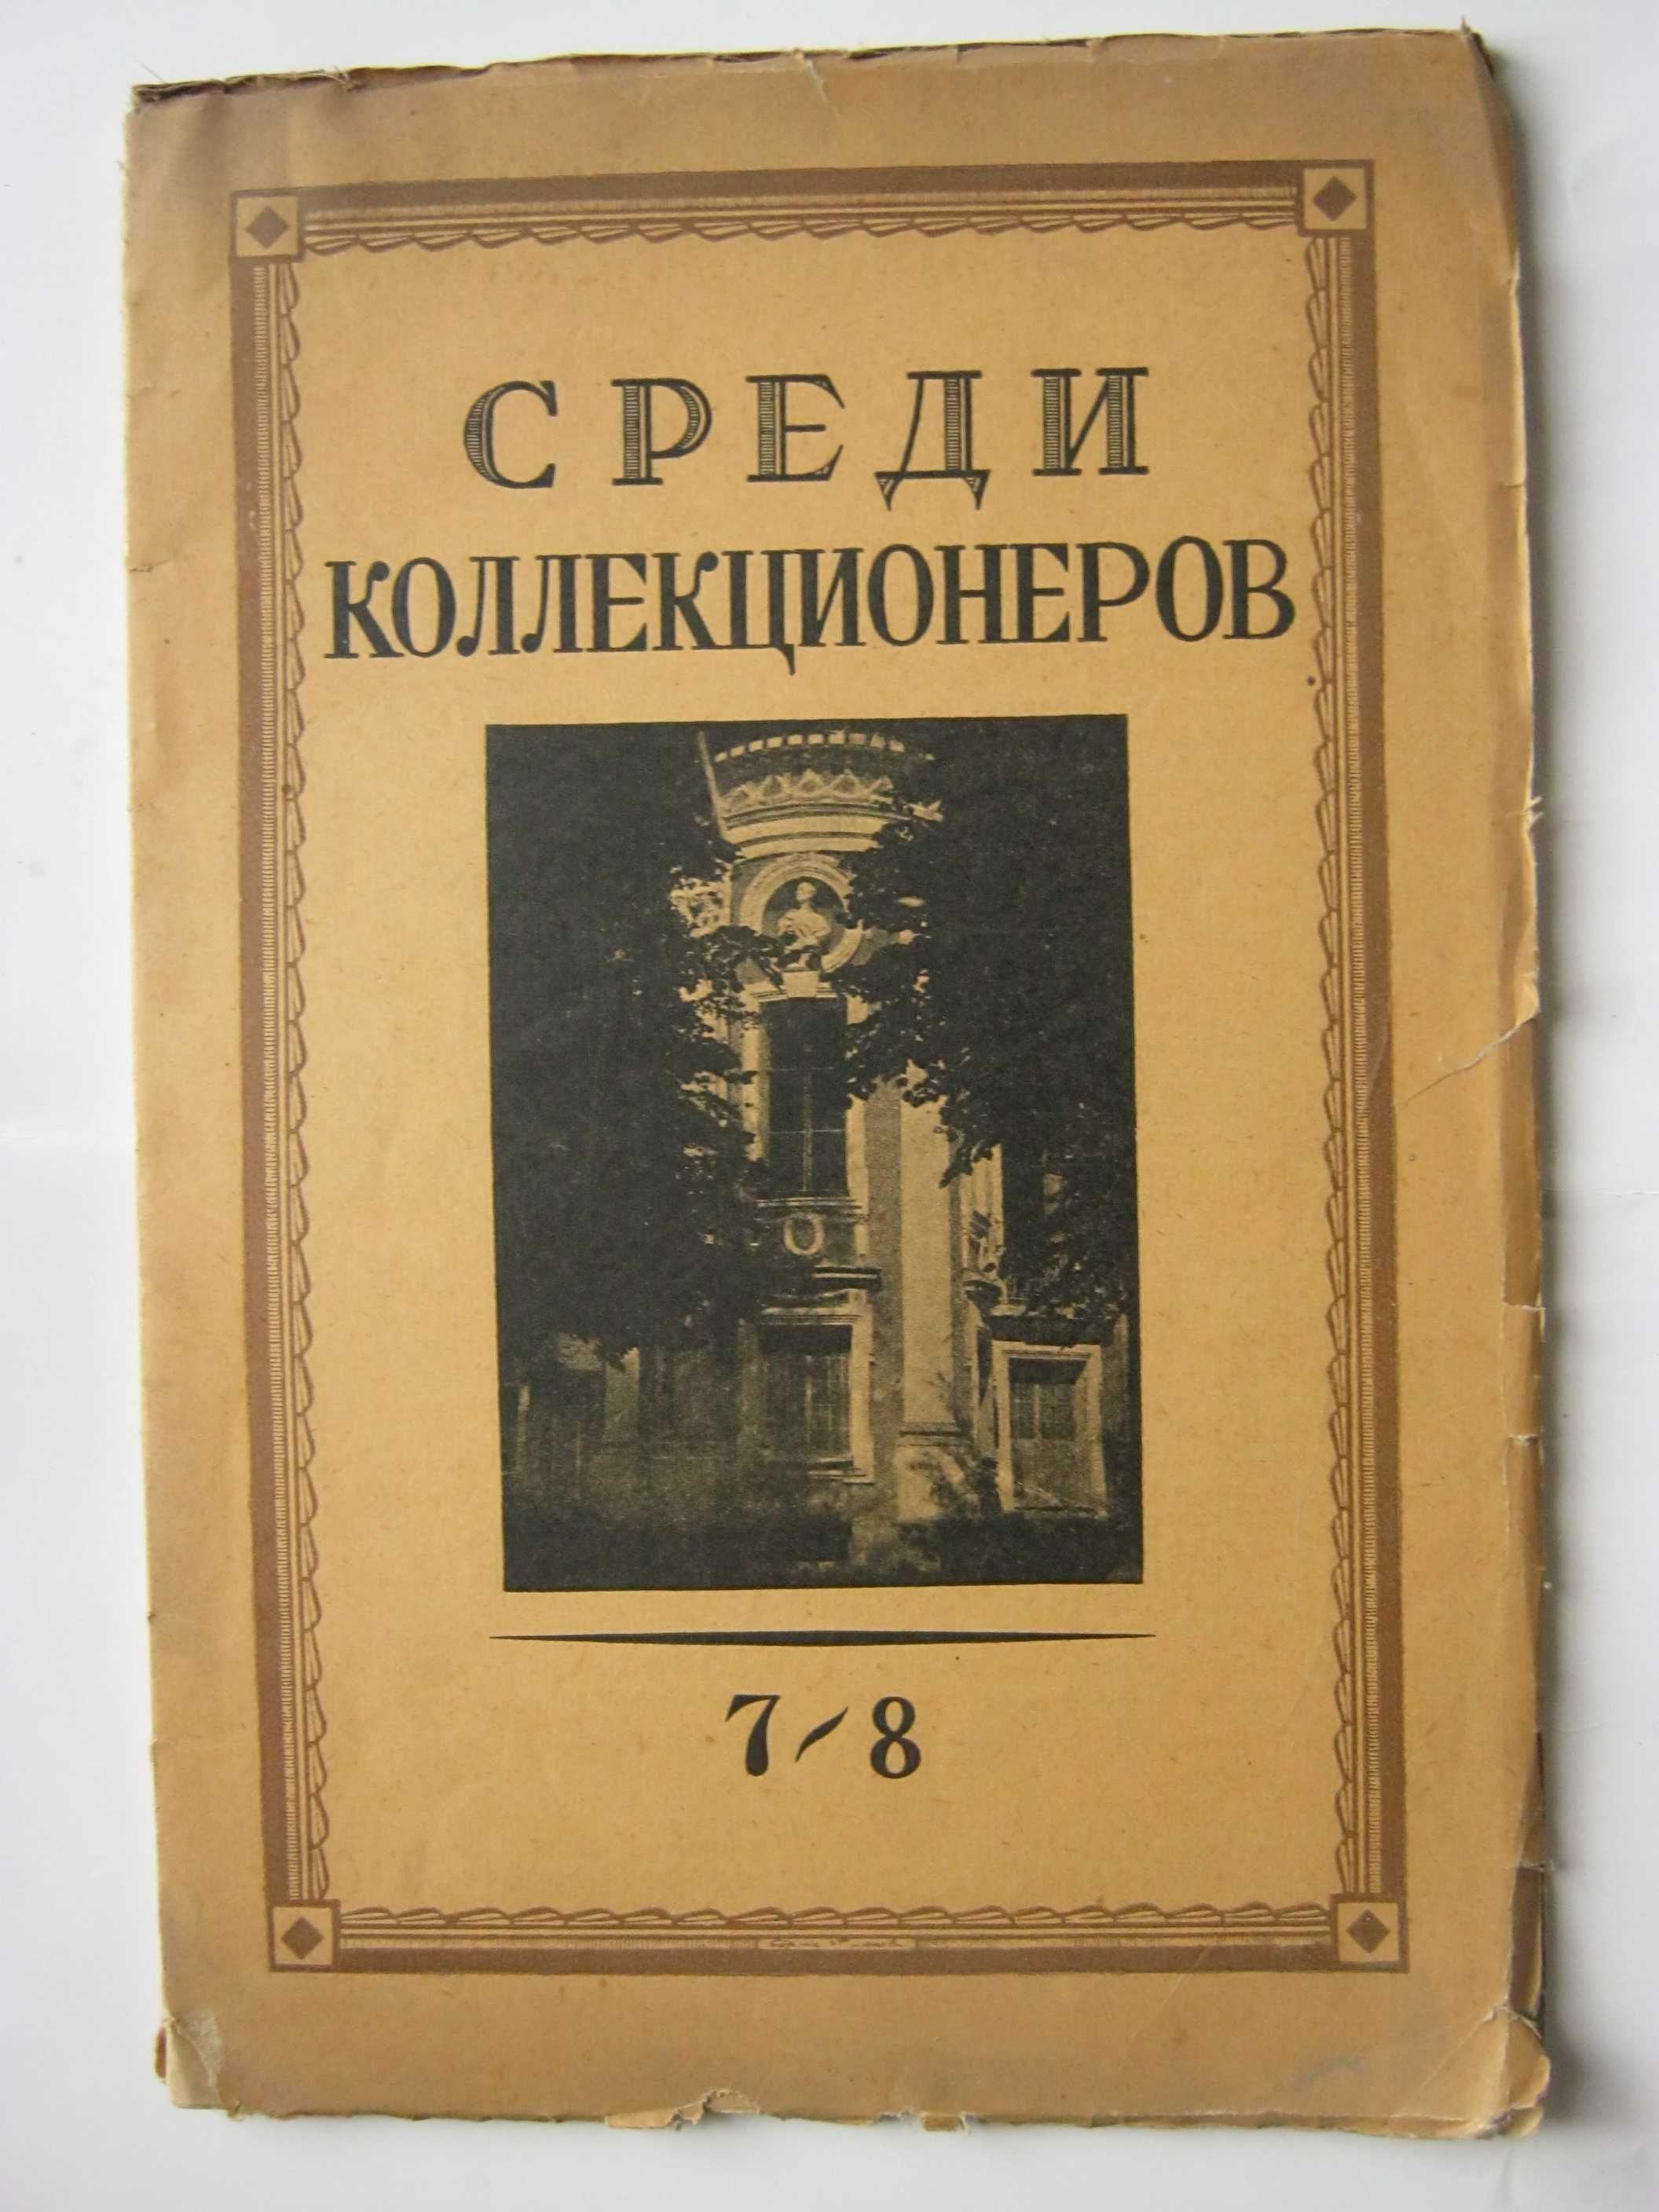 журнал Среди коллекционеров 7/8 за 1924г МСМХХV